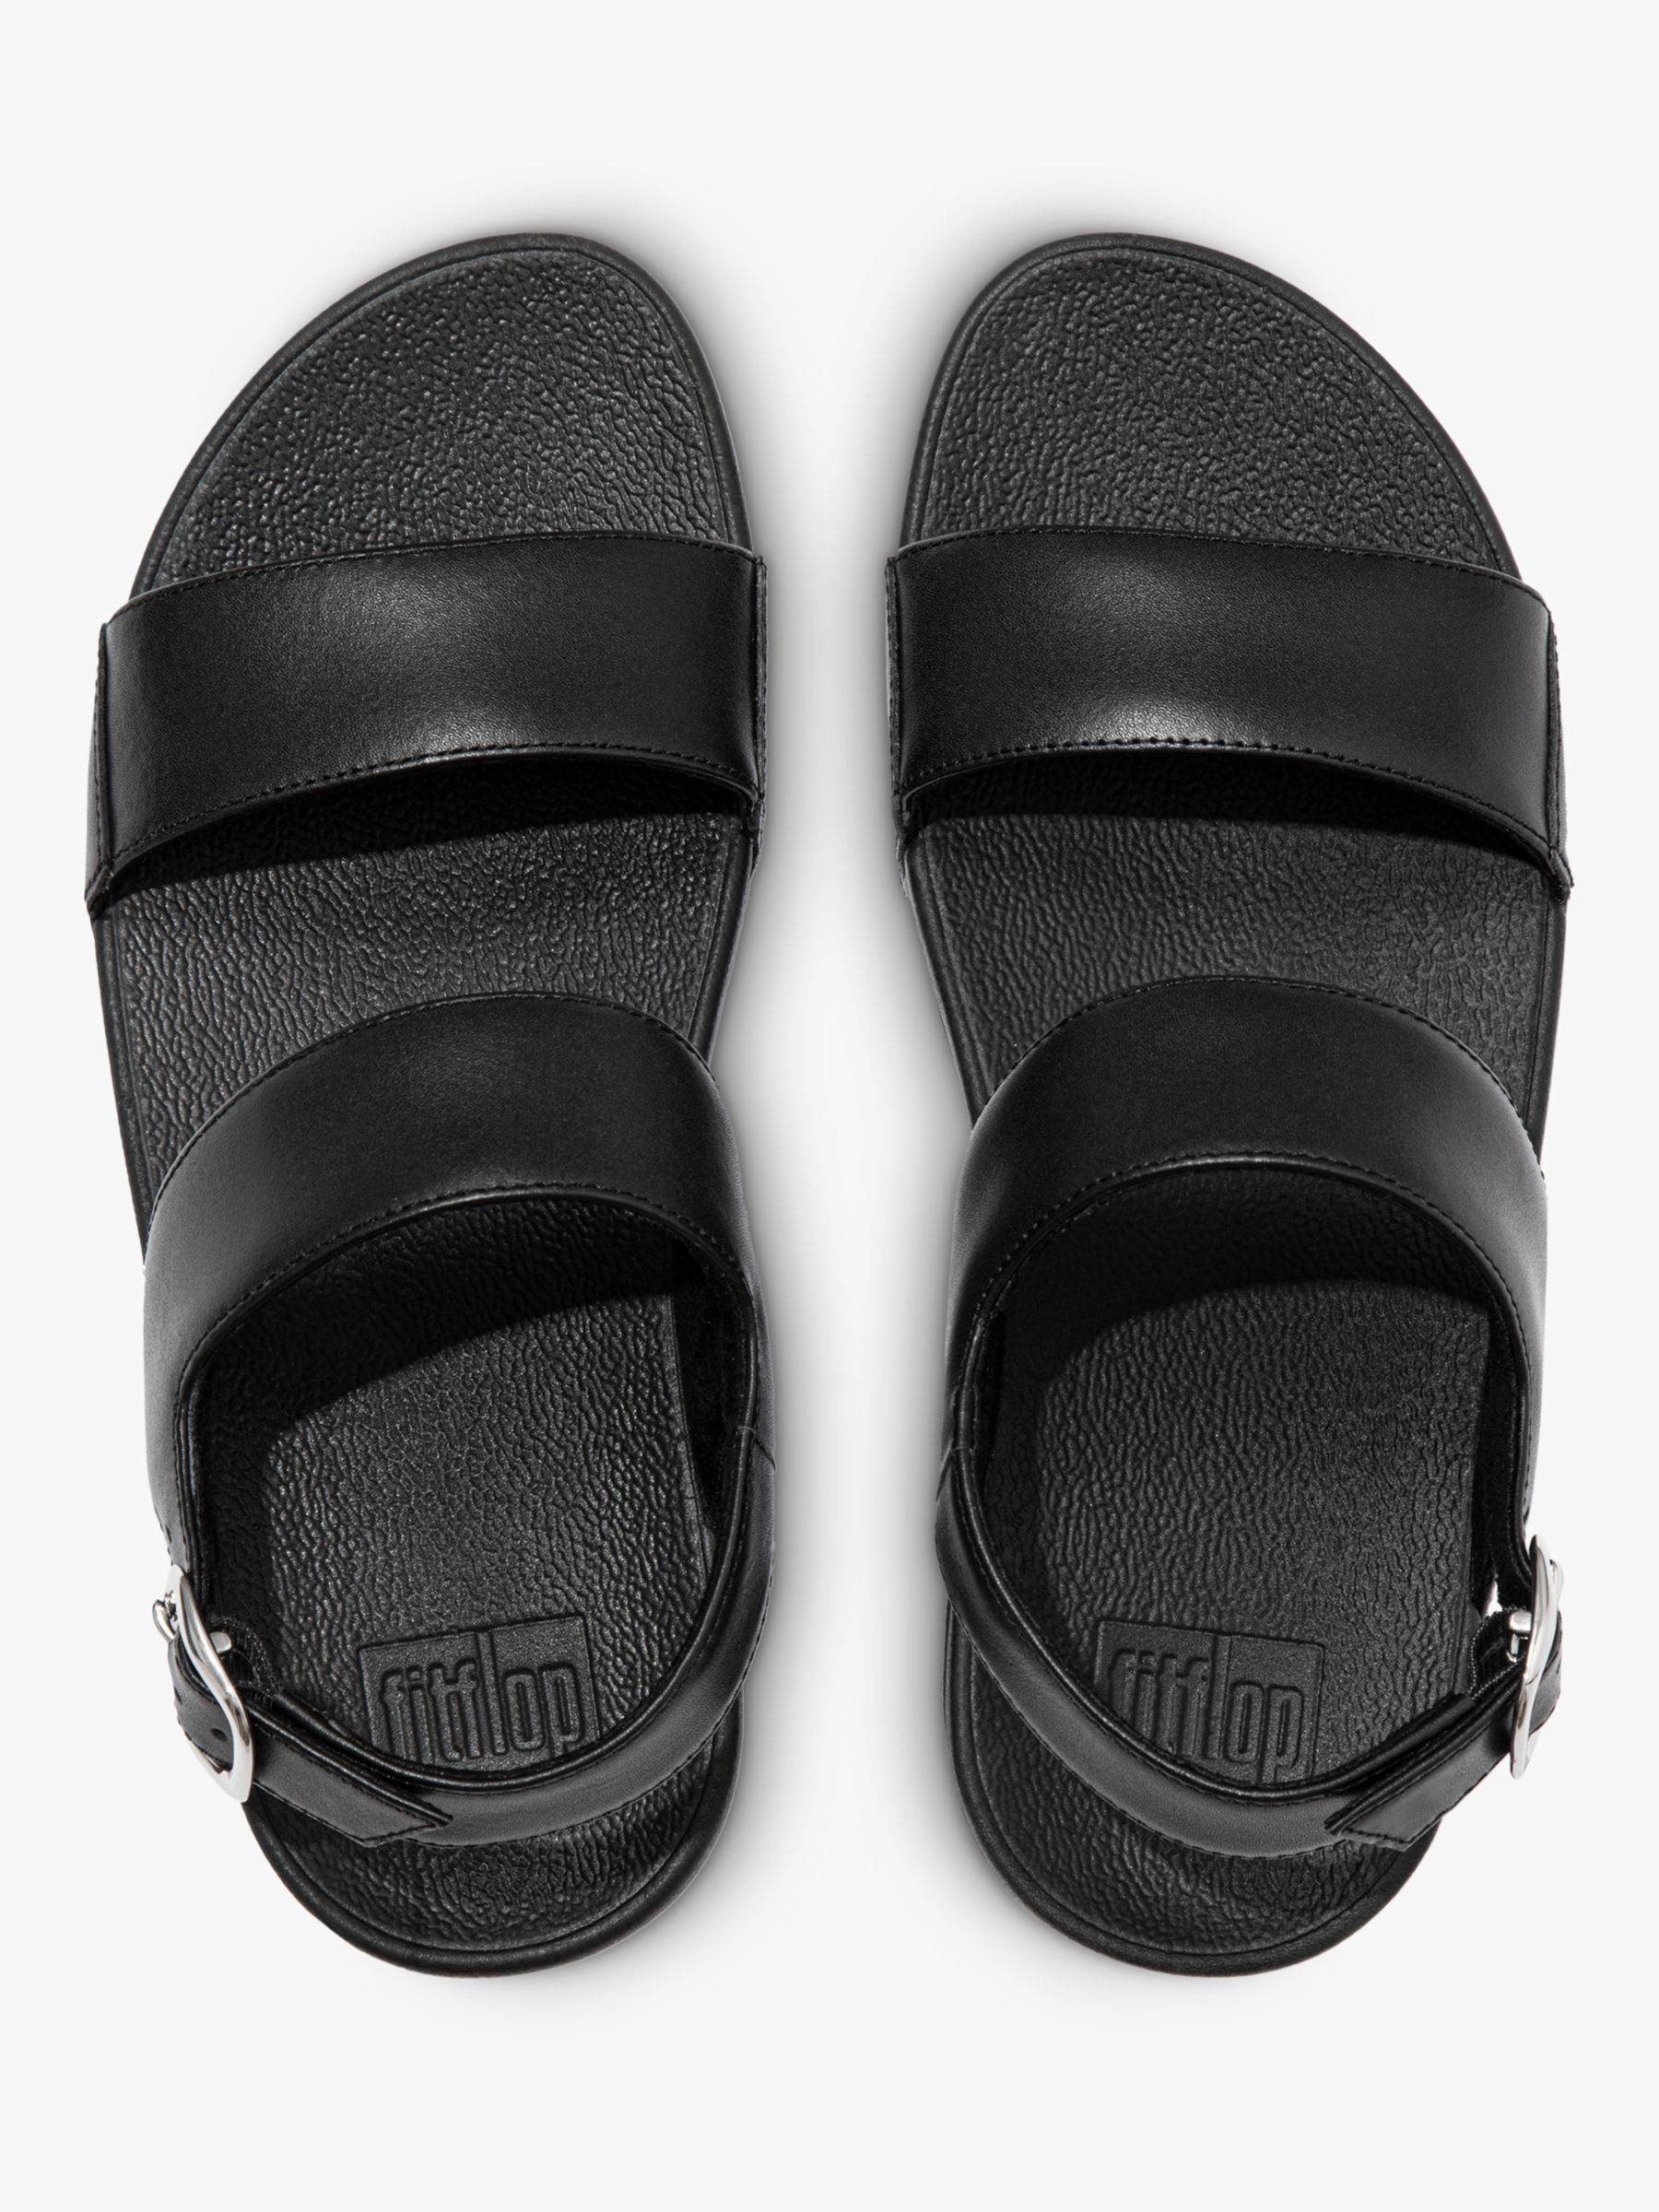 FitFlop Lulu Leather Wedge Heel Sandals, Black at John Lewis & Partners